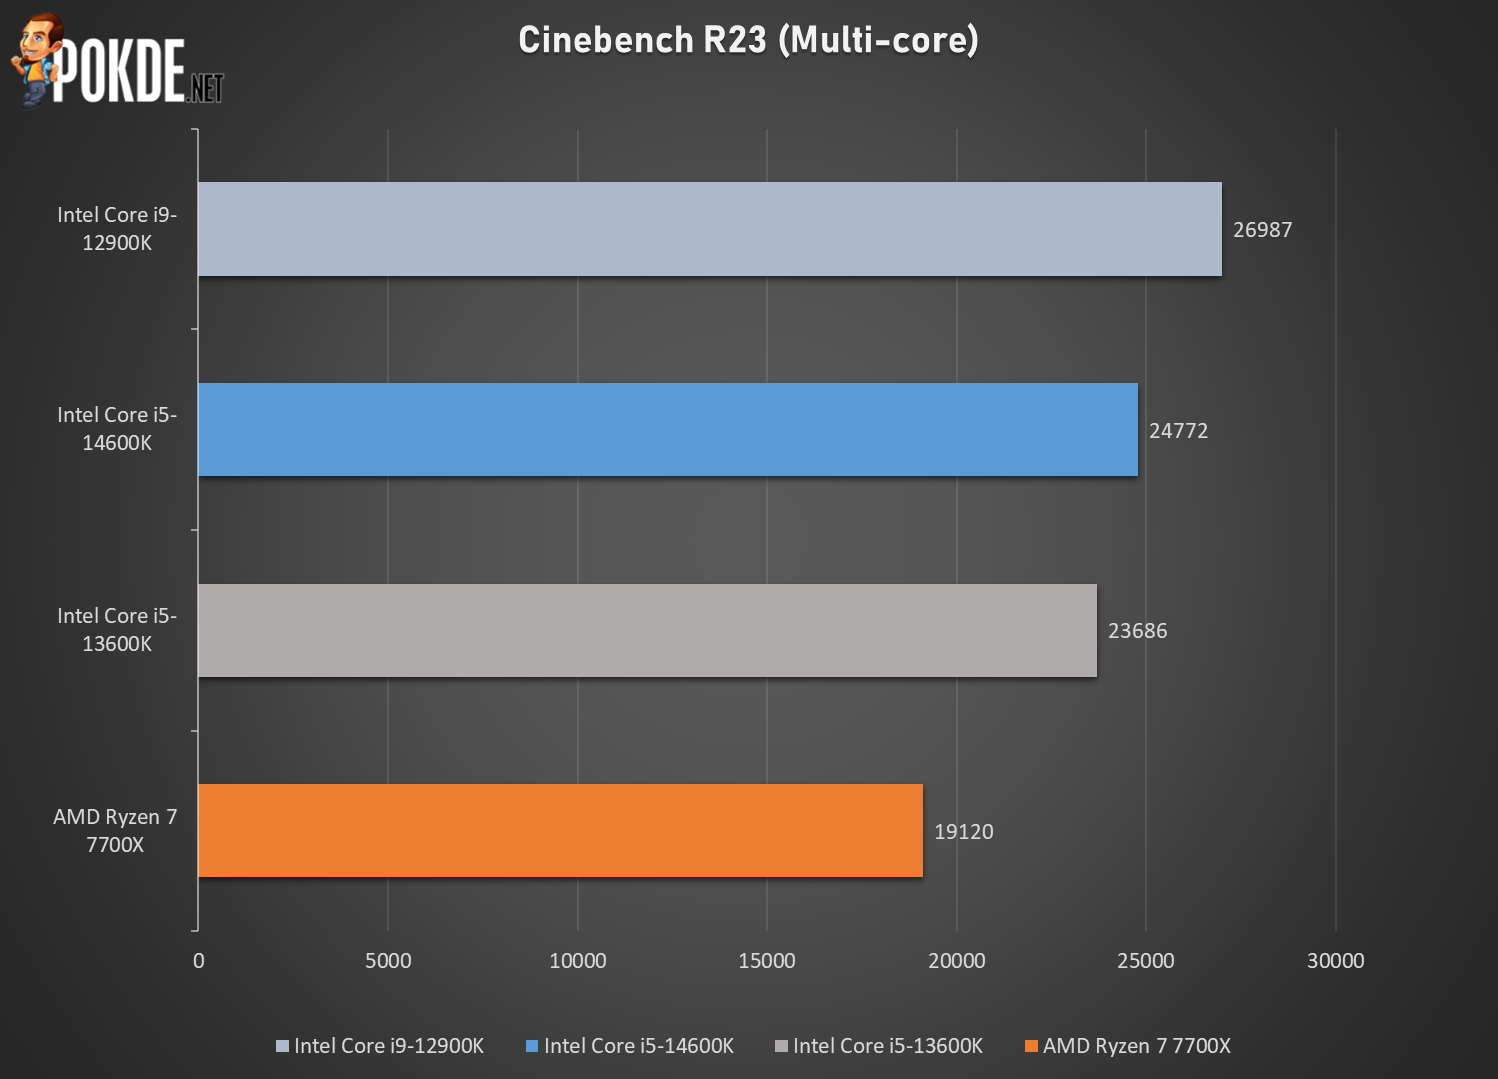 Intel Core i5-14600K vs Intel Core i5-13600K: Raptor Lake chips compared